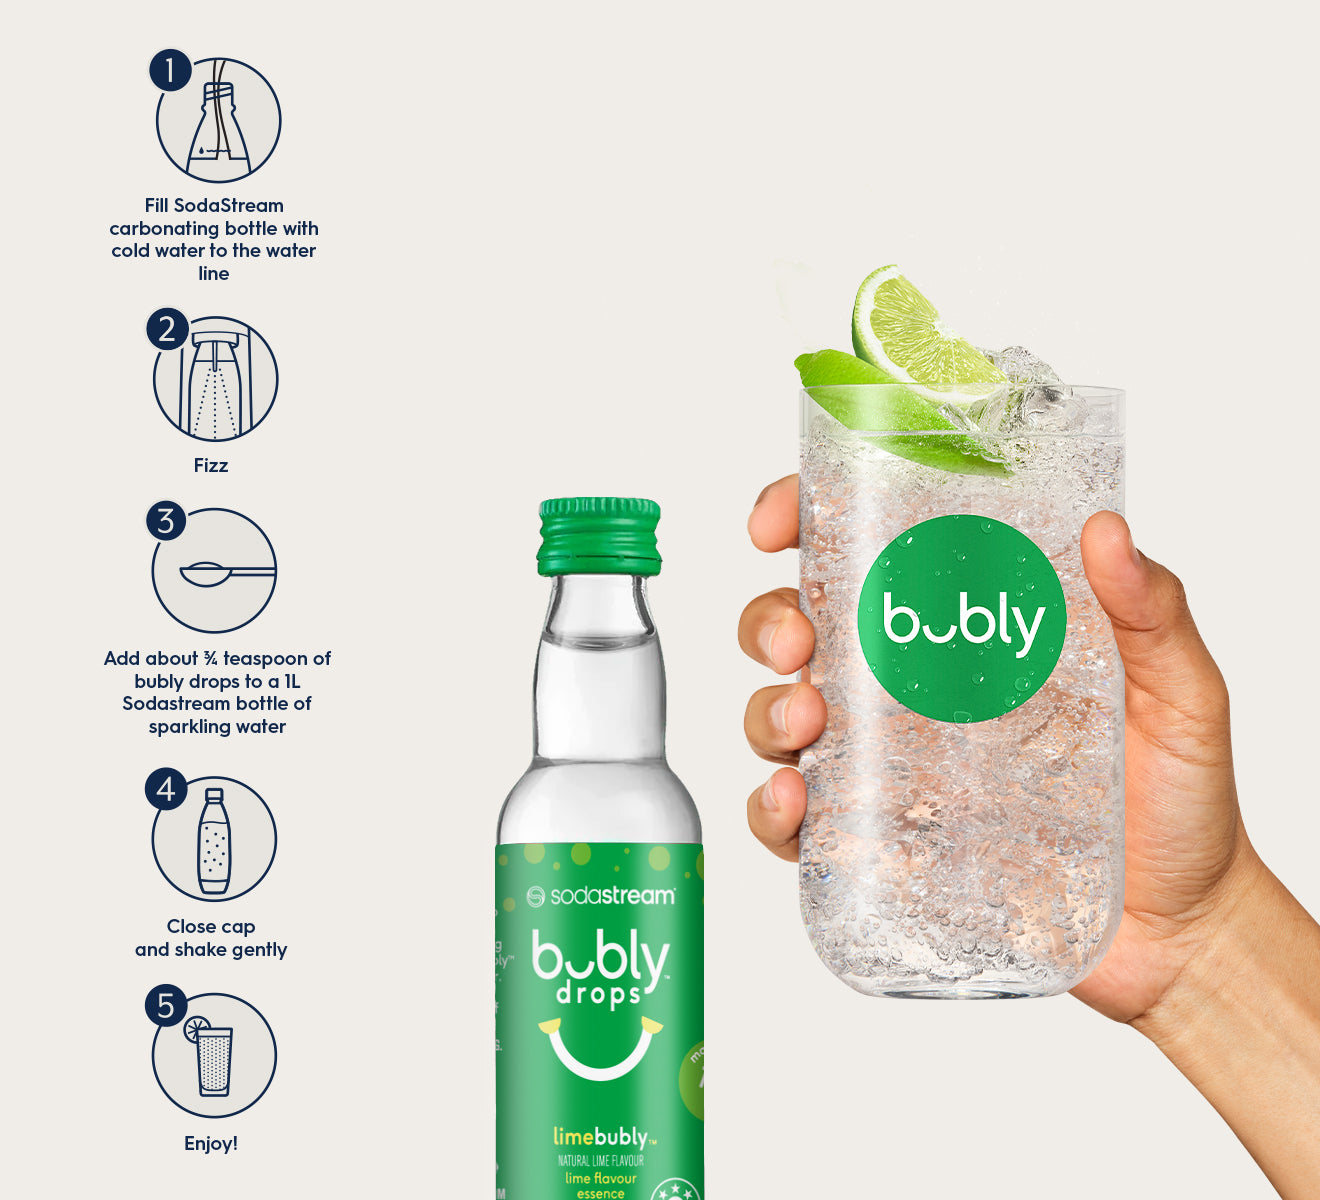 sodastream lime bubly drops™